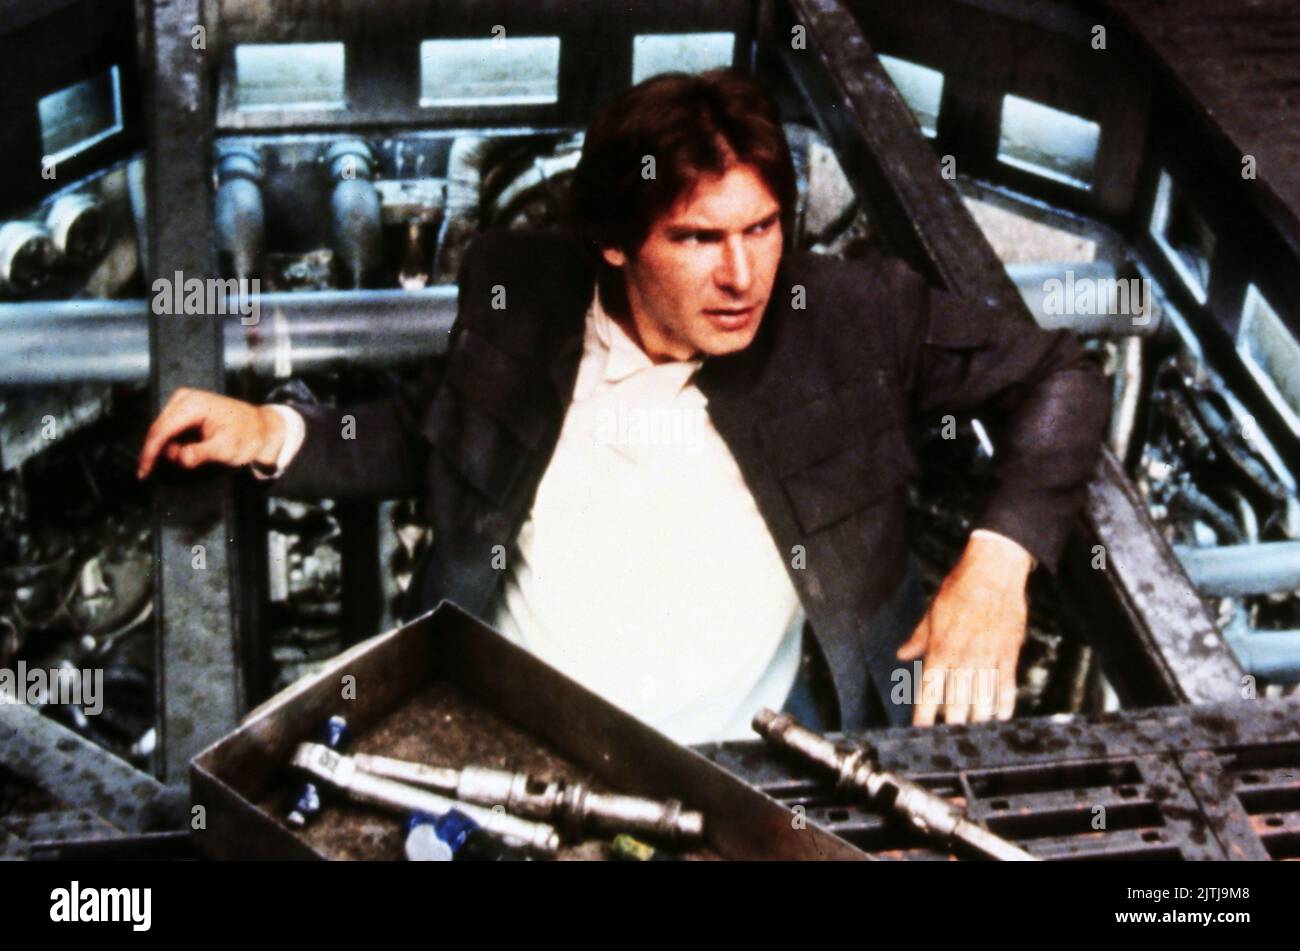 Star Wars, aka Krieg der Sterne, USA 1977, Regie: George Lucas, Darsteller: Harrison Ford Foto Stock